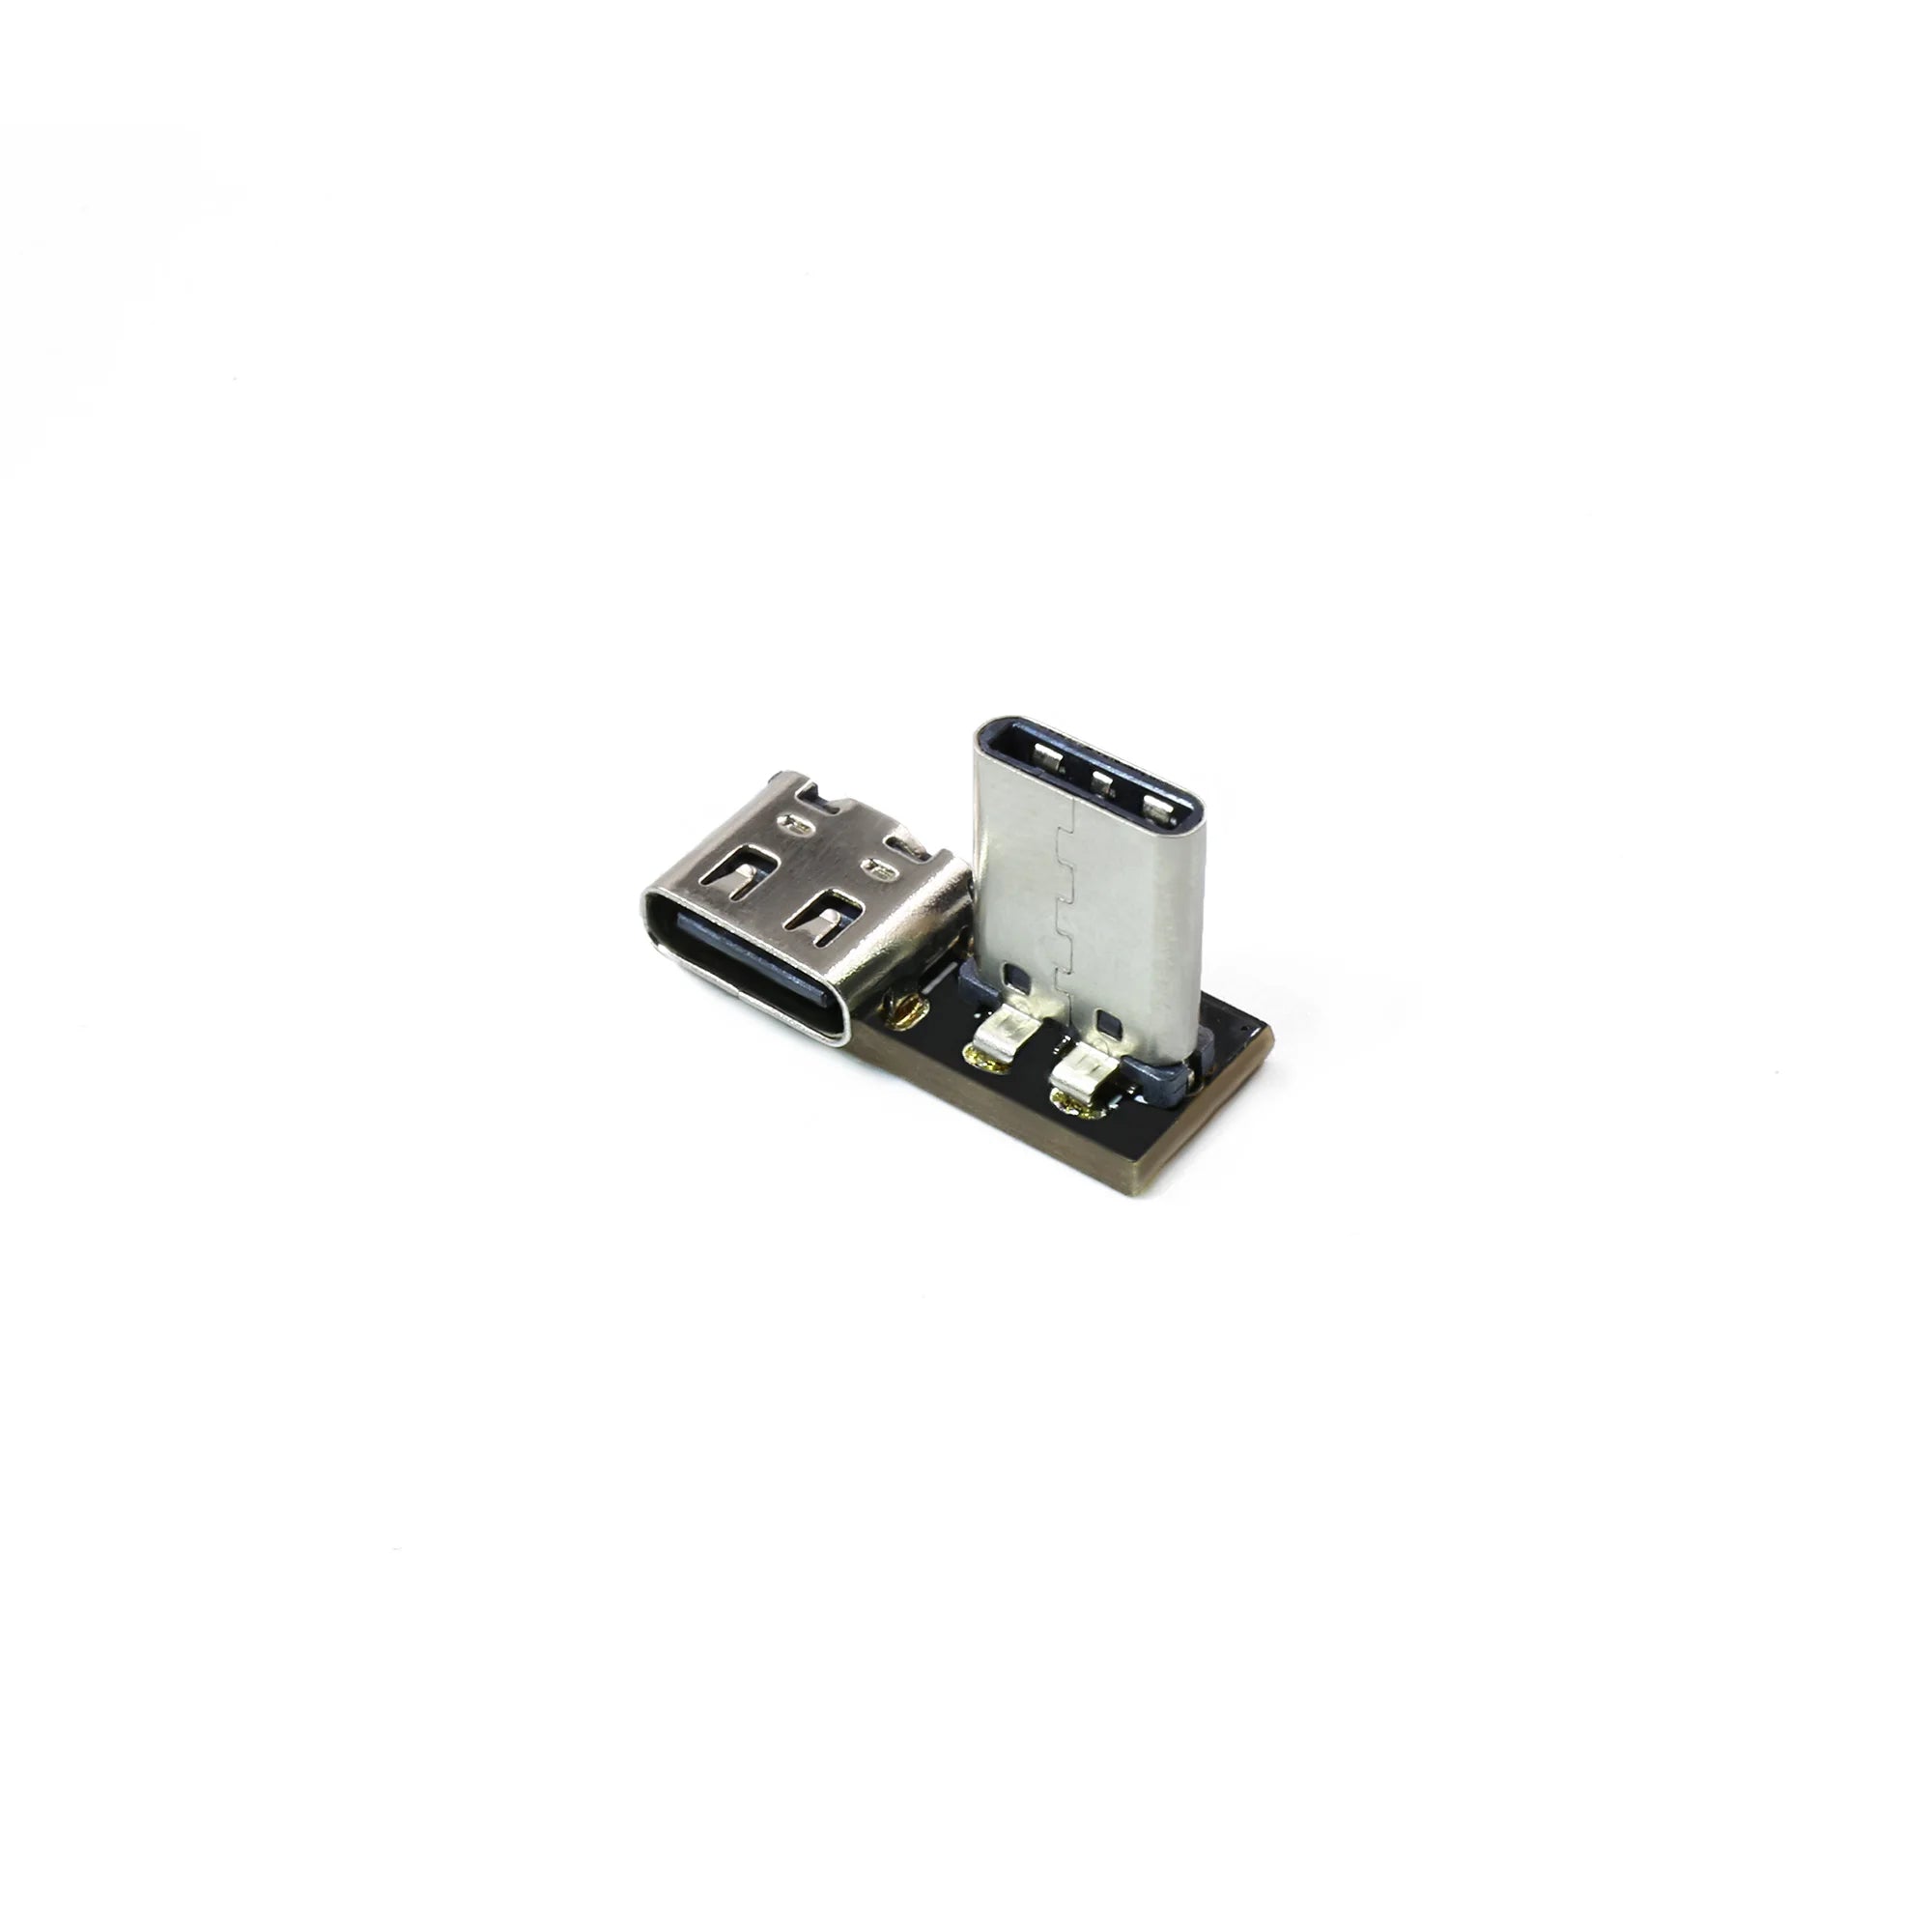 GEPRC Type C USB Adapter Board Material : metal Four-wheel Drive At